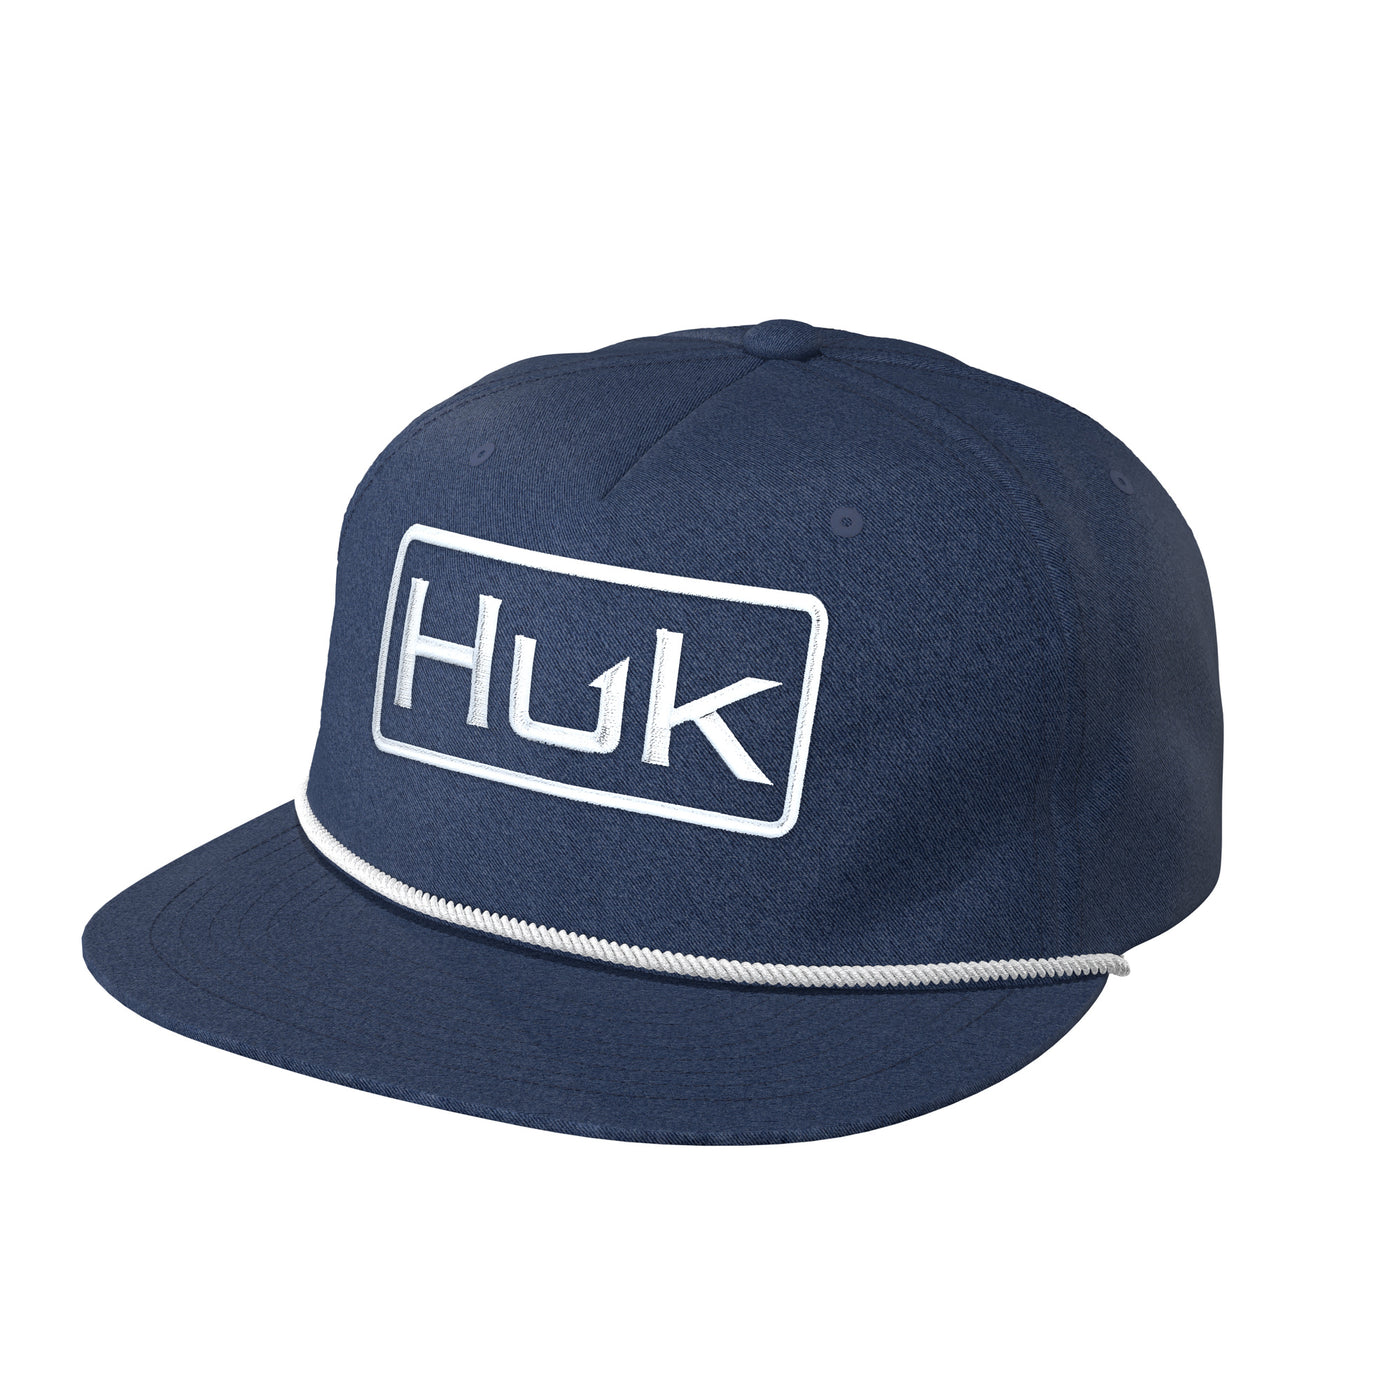 Captain Huk Rope Hat